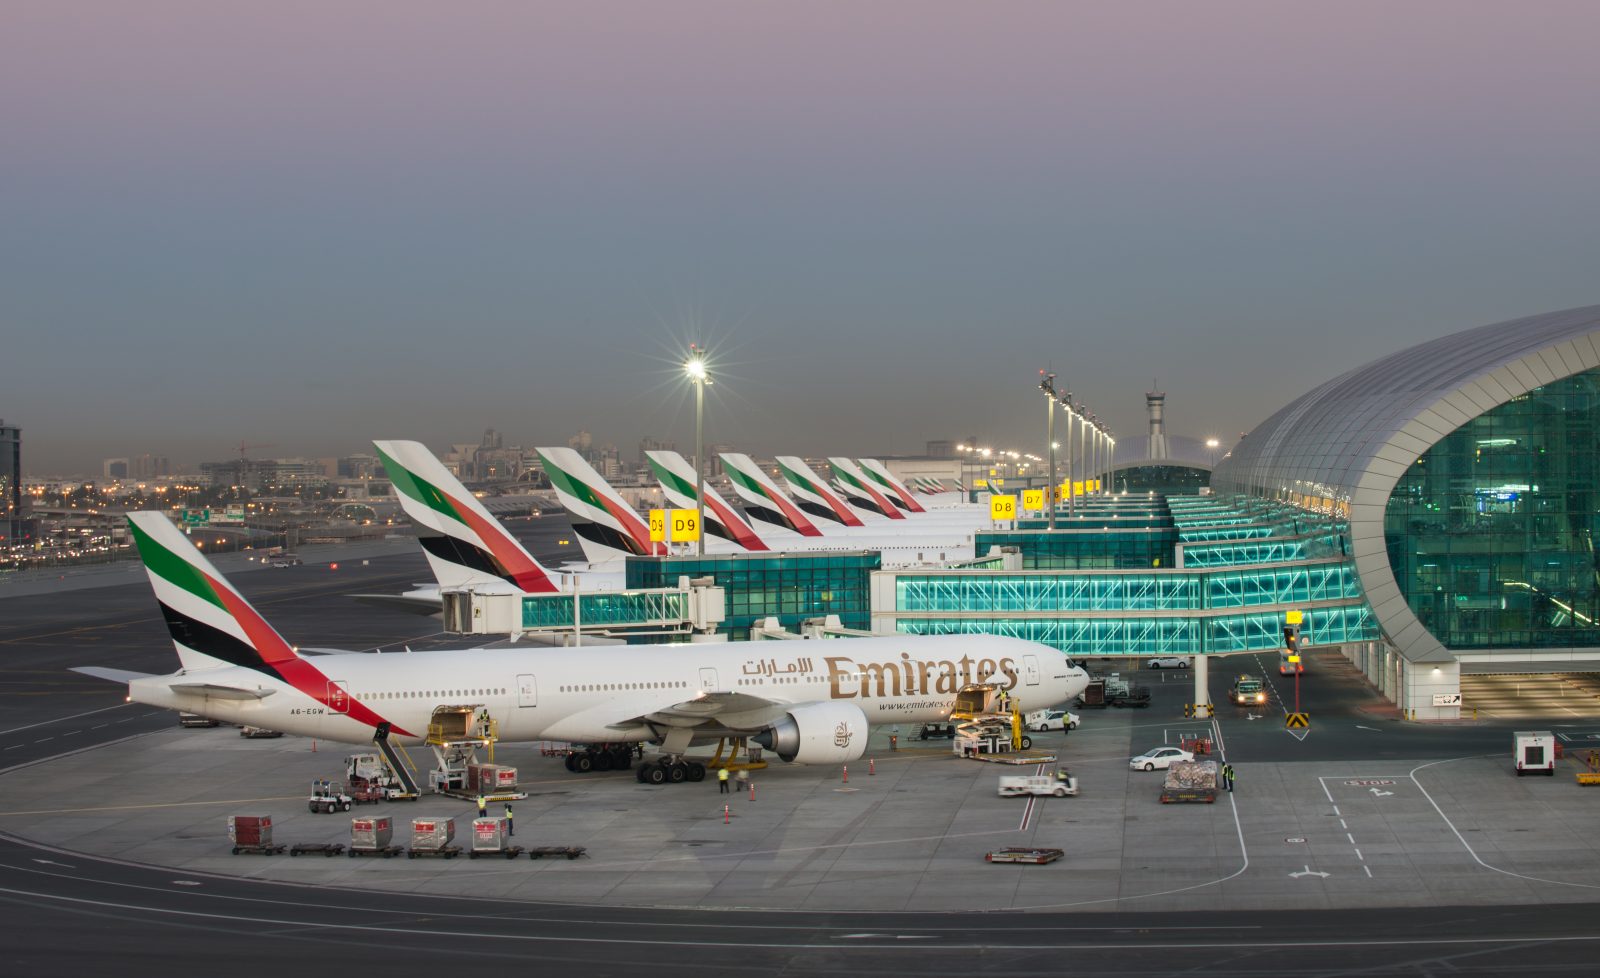 Dubai International Airport Wins Top Award for Response to Crash Landing of EK521 in August 2016